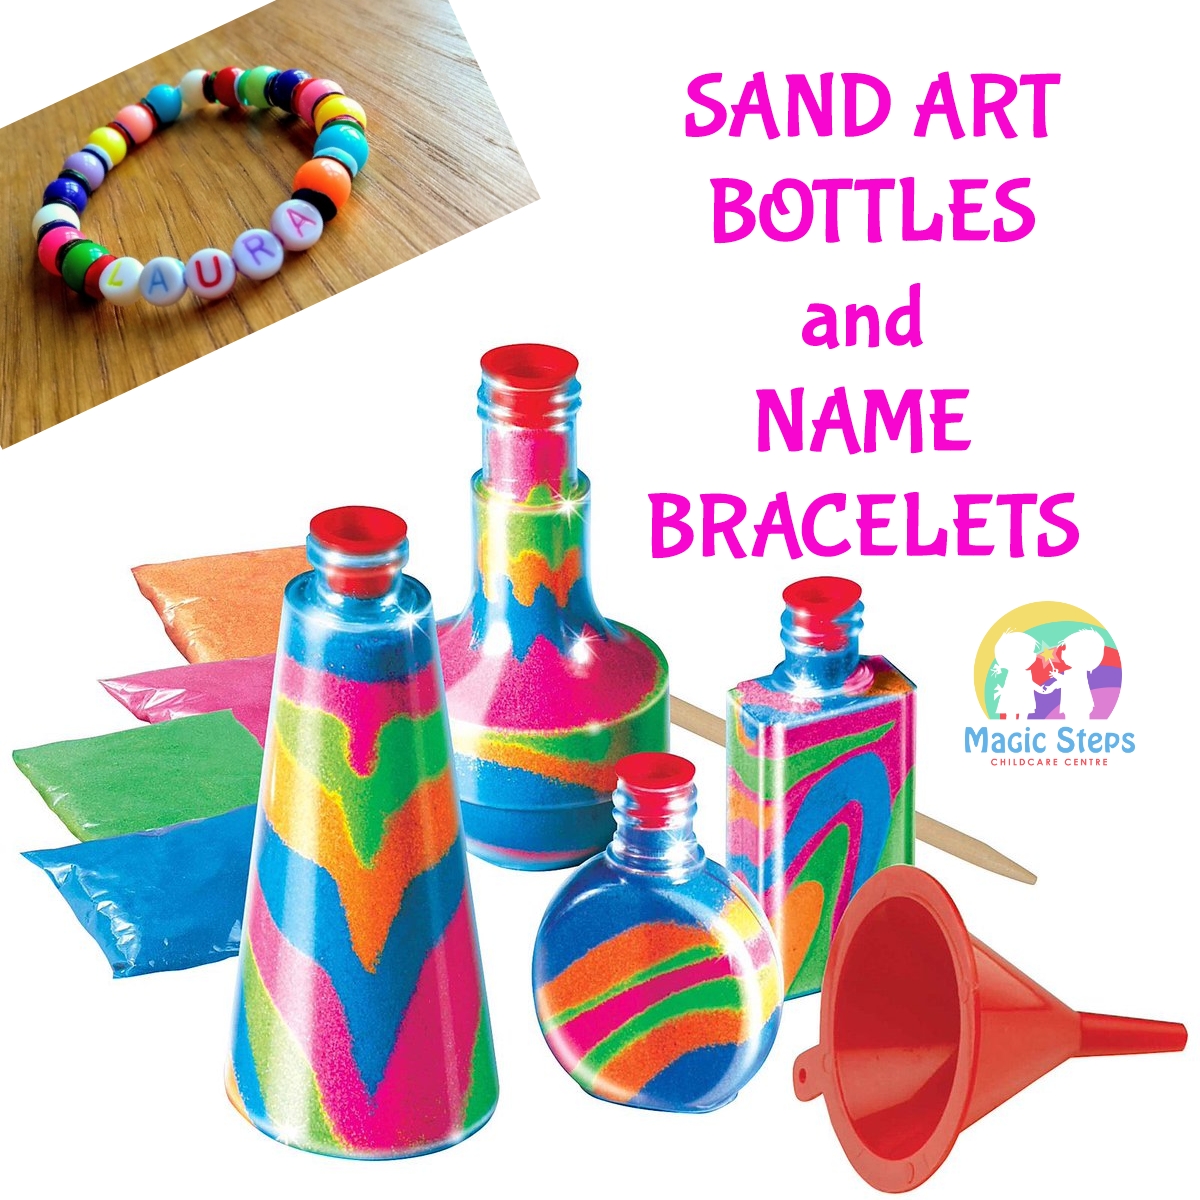 Sand Art Bottles and Name Bracelets- Tuesday 12th October